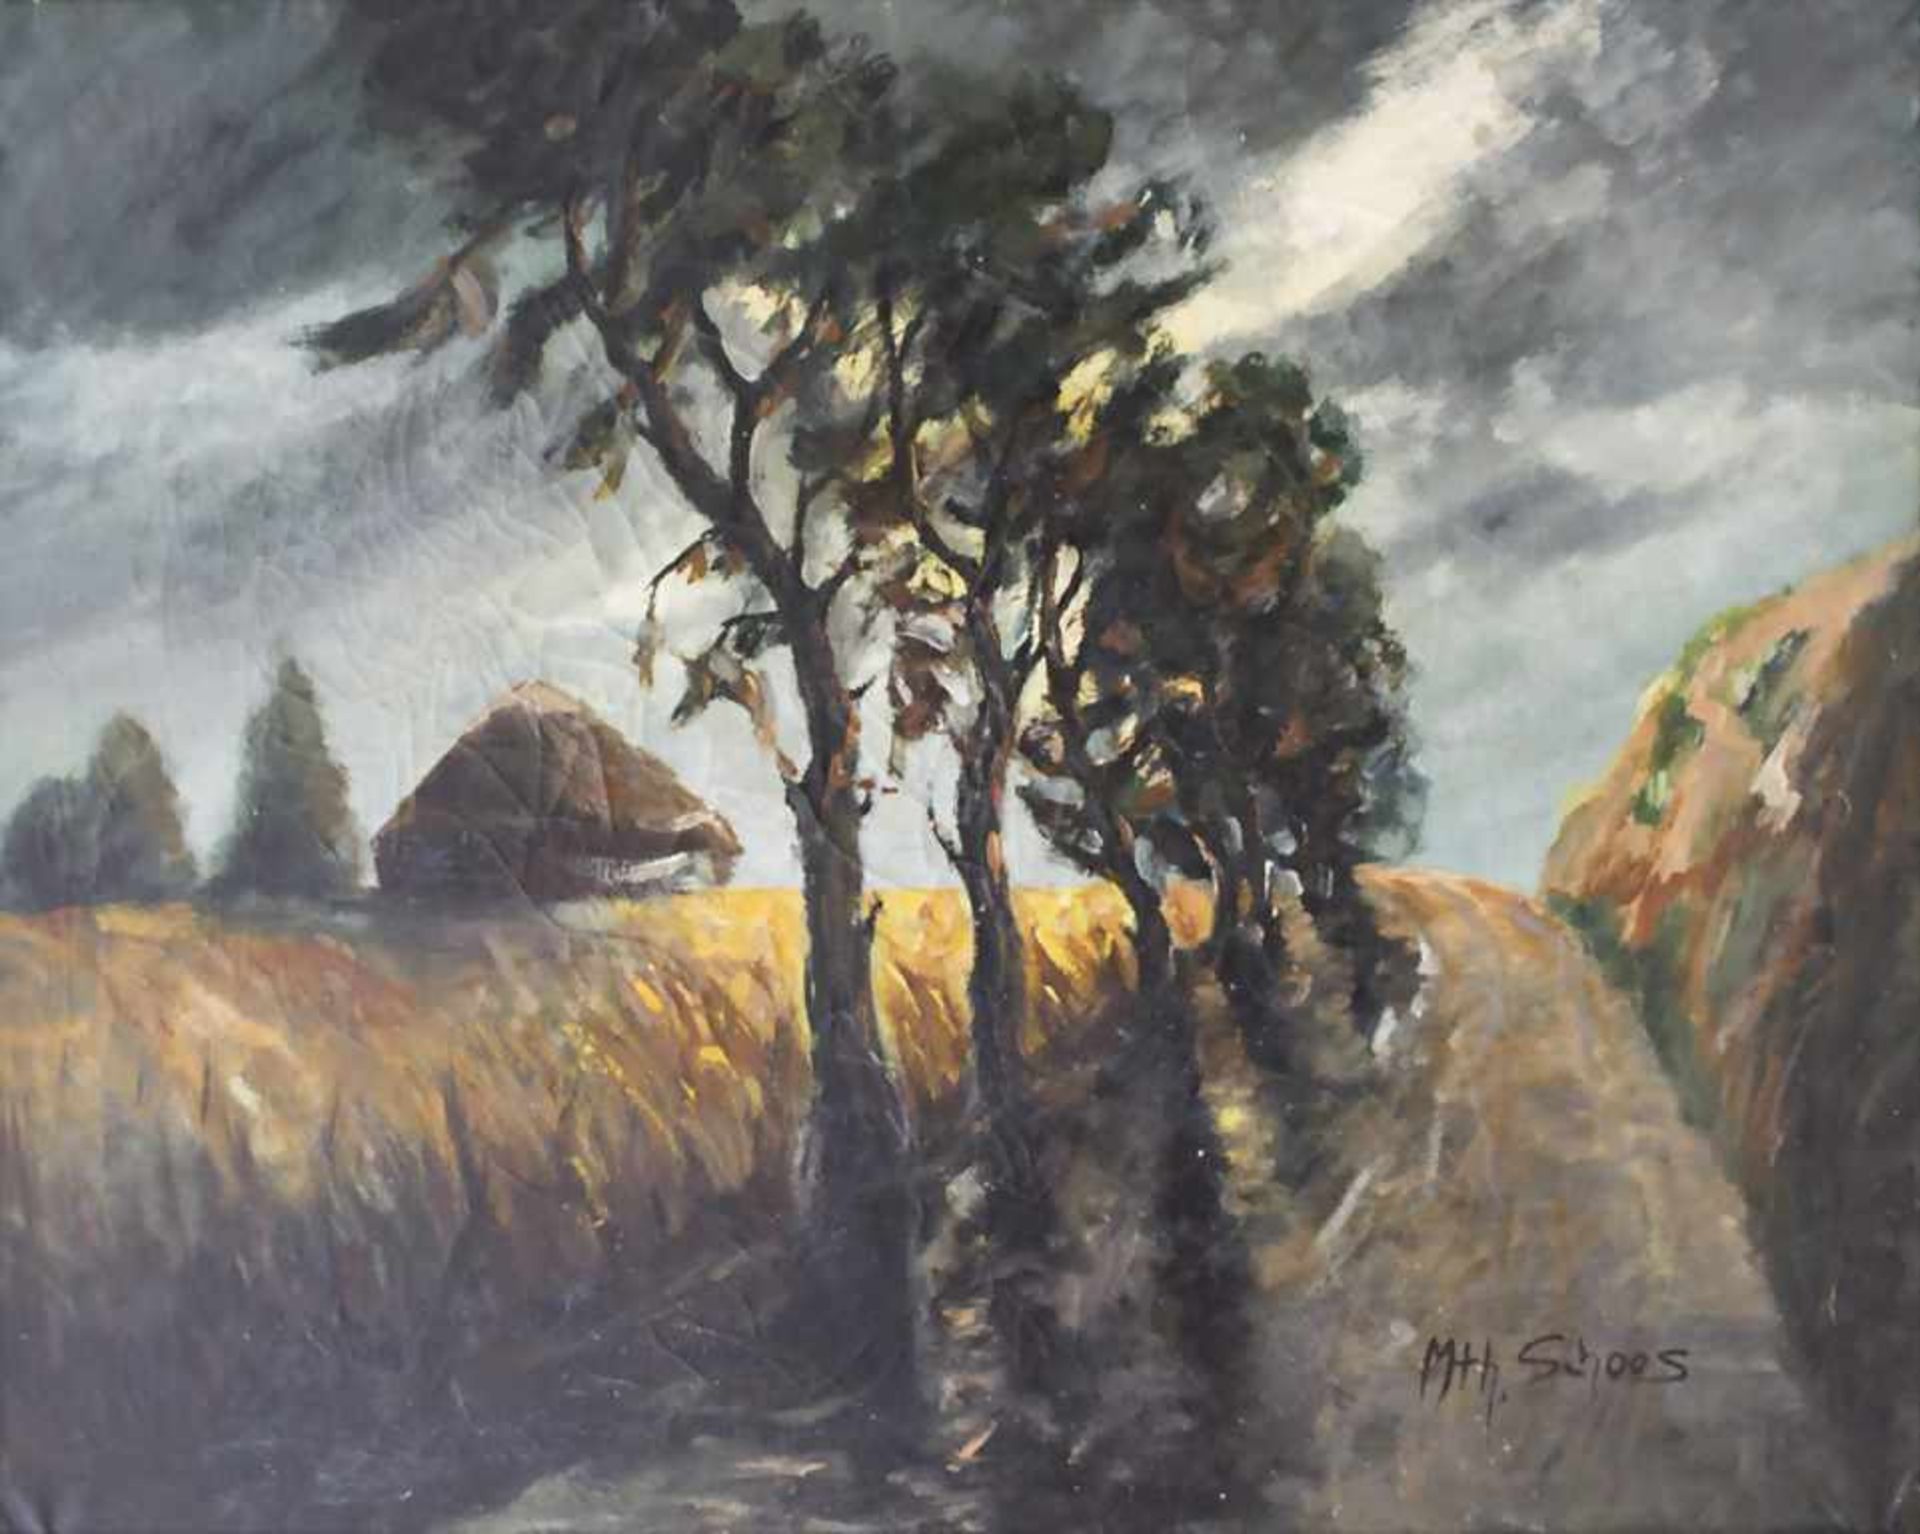 Mth. Schoos (20. Jh.), 'Kornfeld mit aufkommendem Gewitter' / 'A cornfield with upcoming storm'<